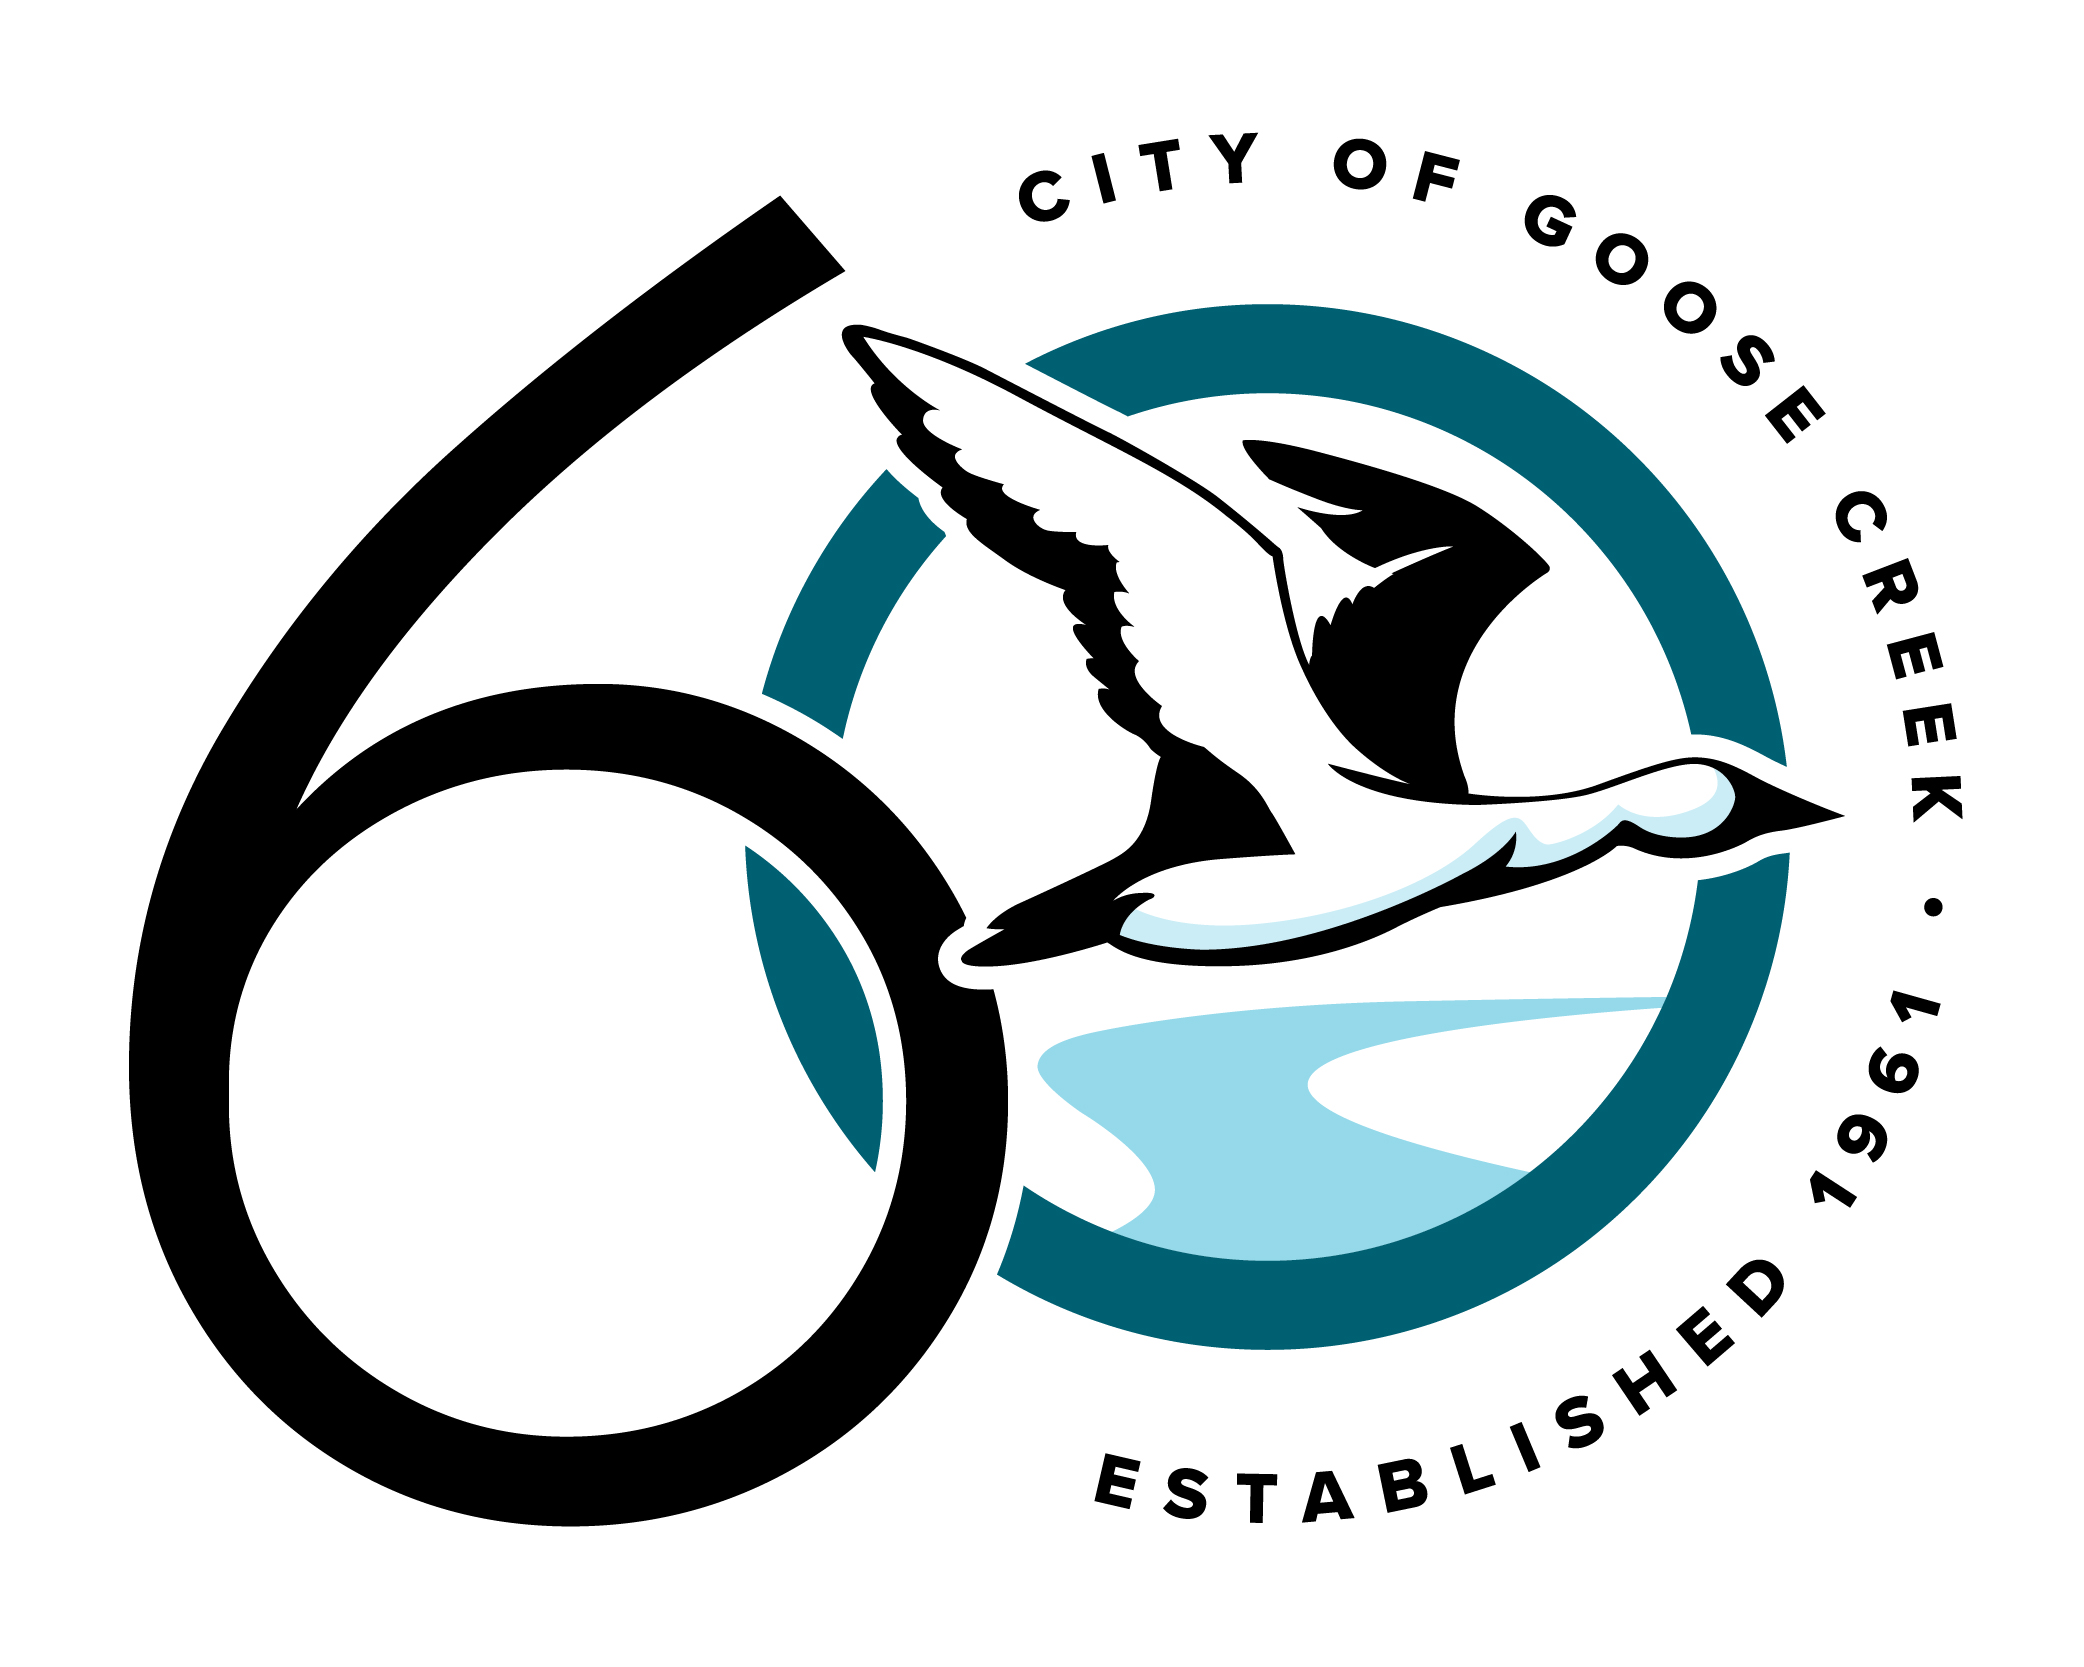 60th Logo